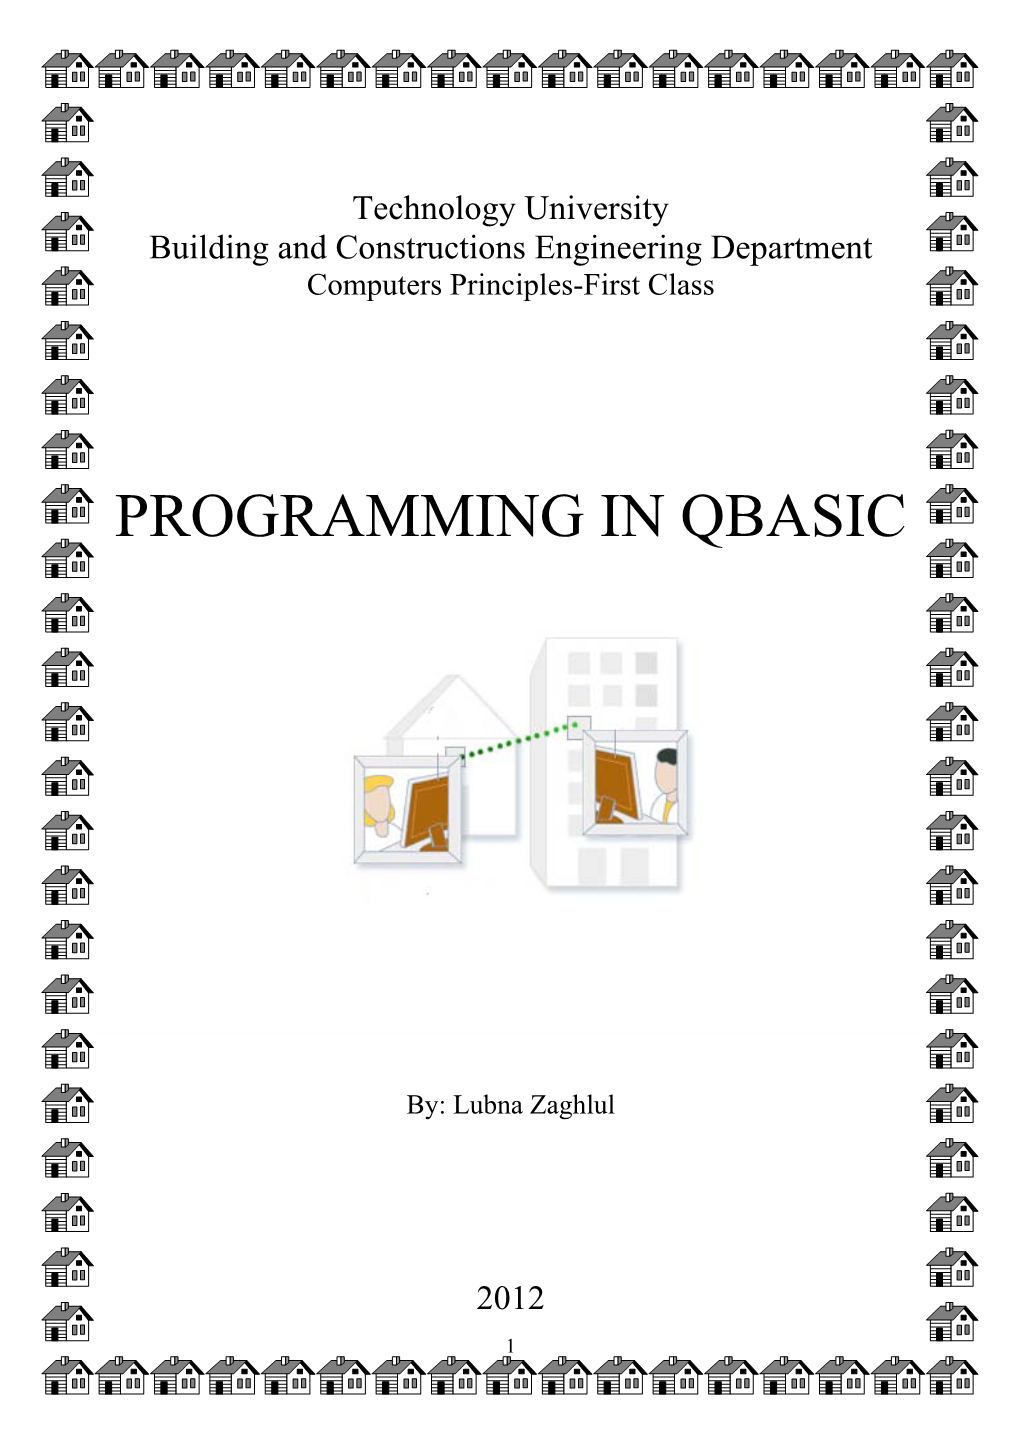 Programming in Qbasic